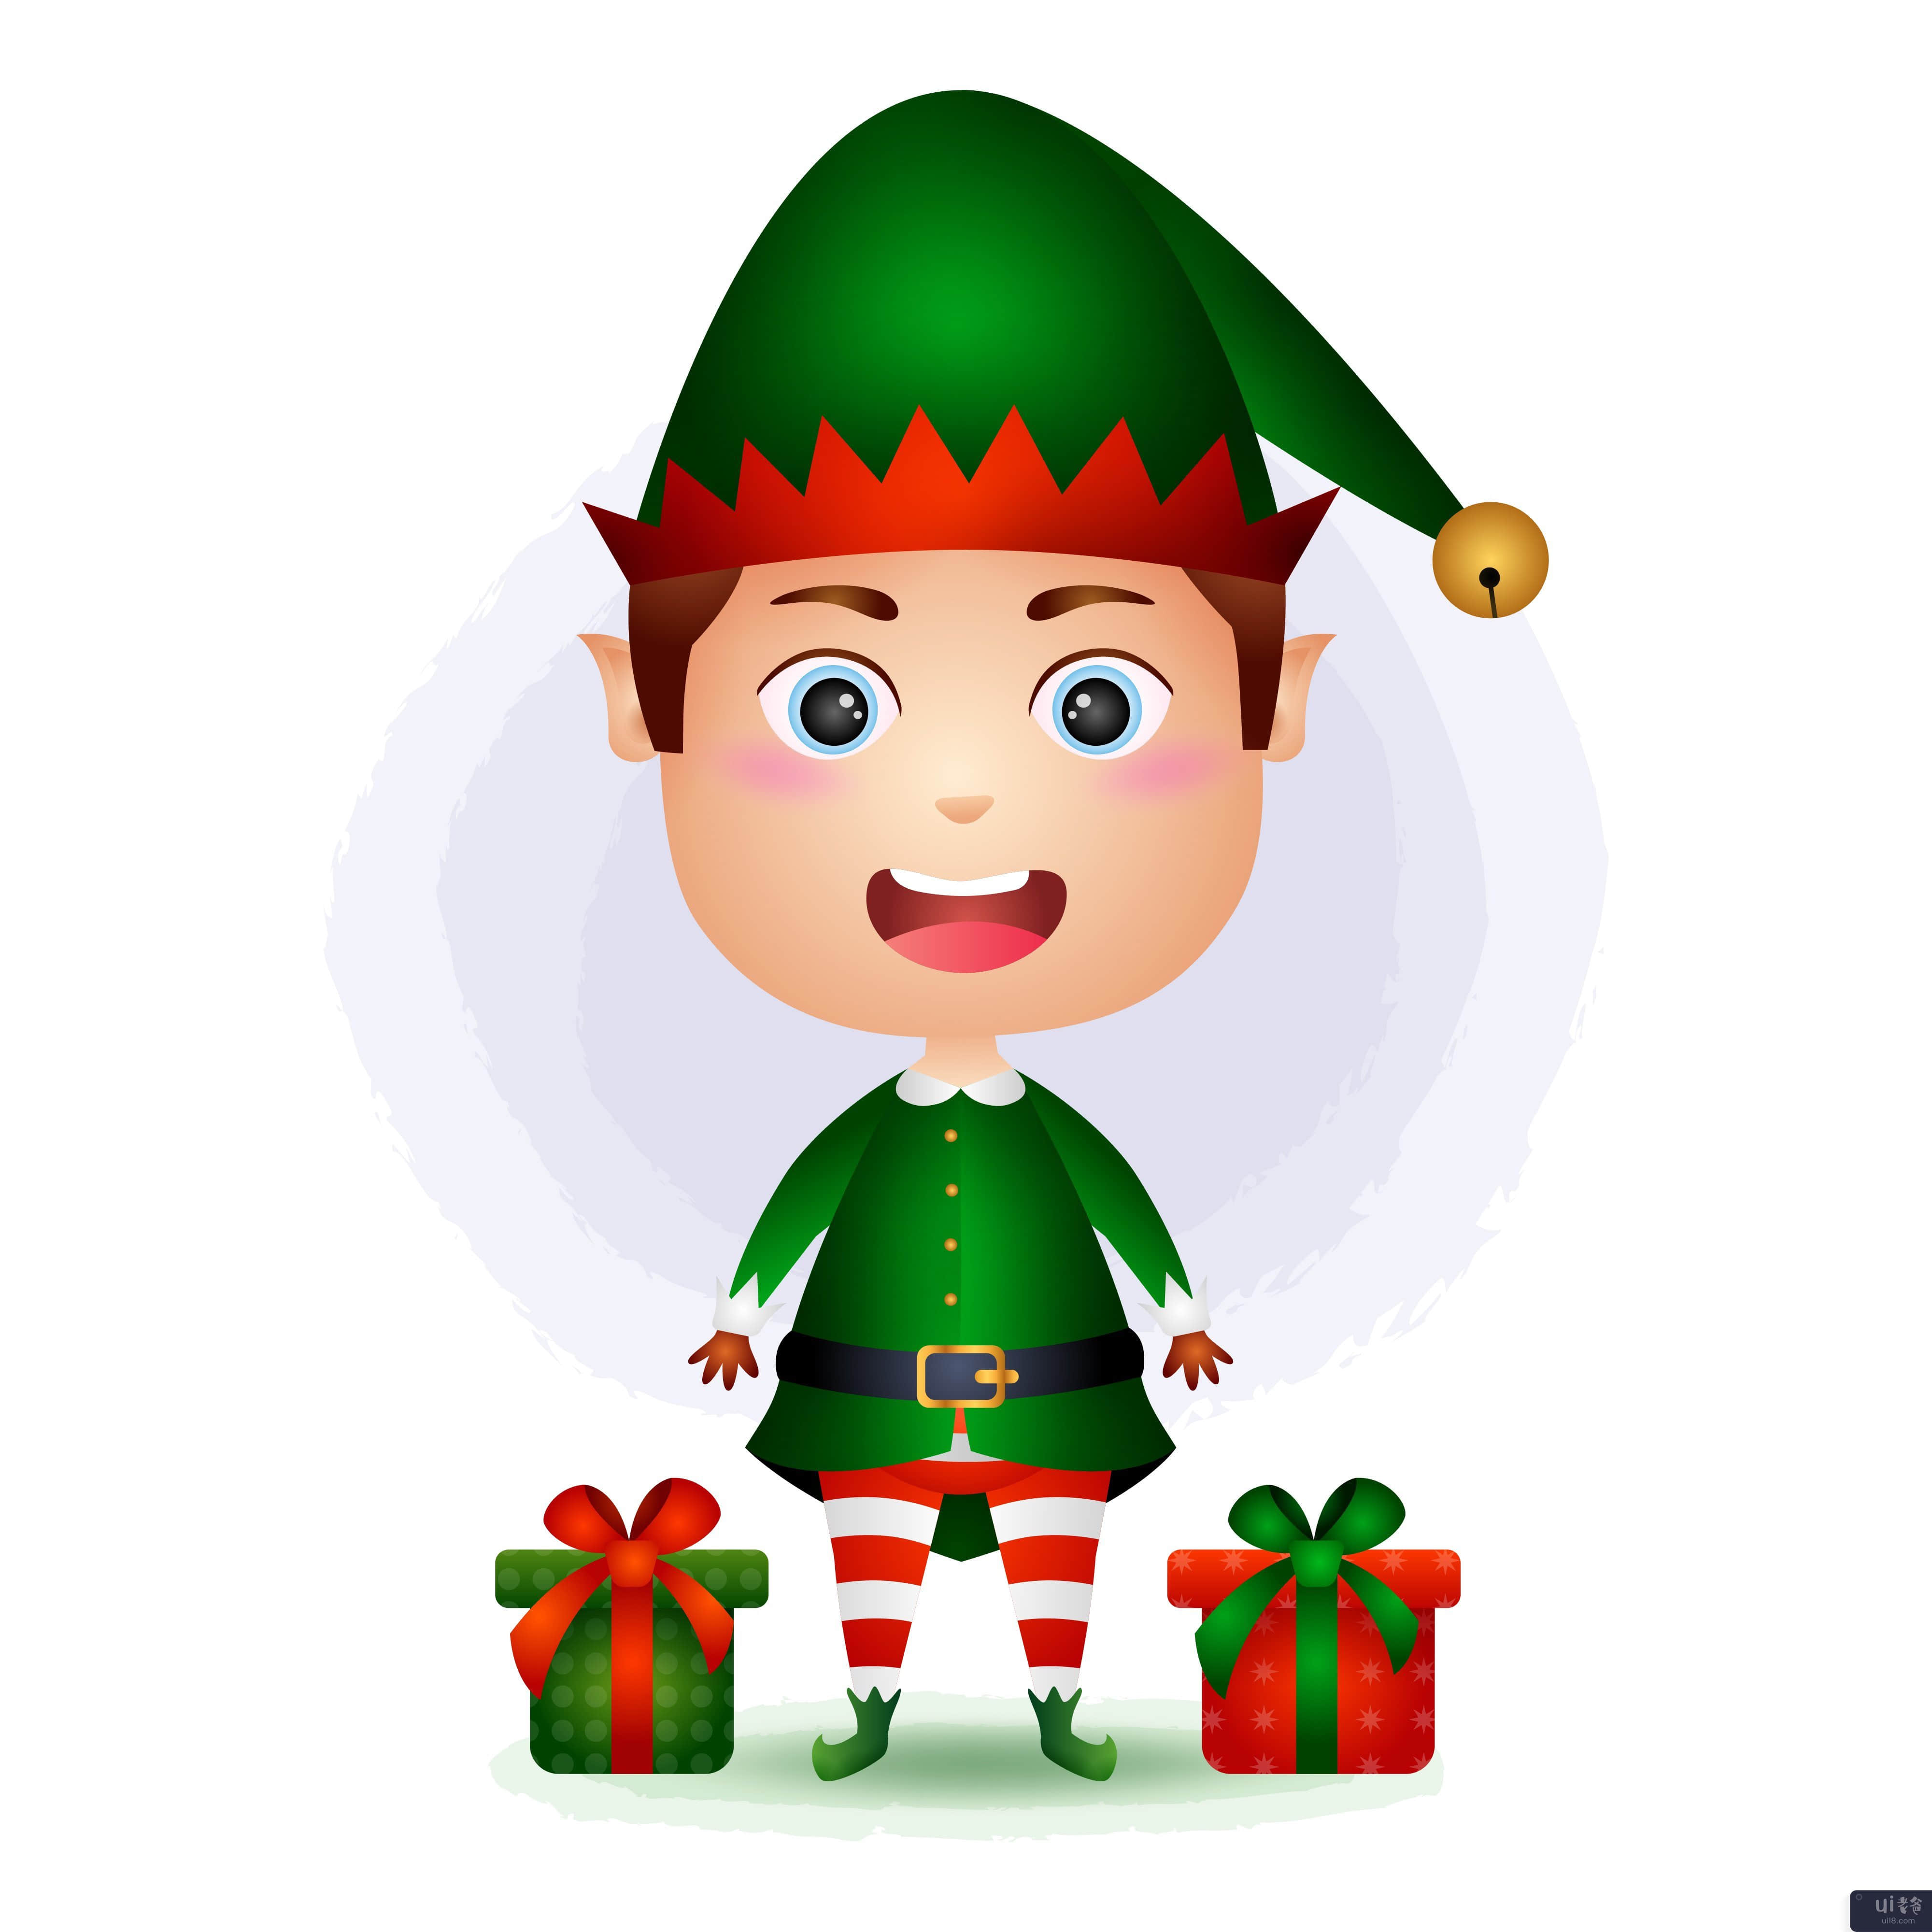 可爱的男孩精灵与礼品盒矢量图(cute boy elf with gifts box vector illustration)插图2